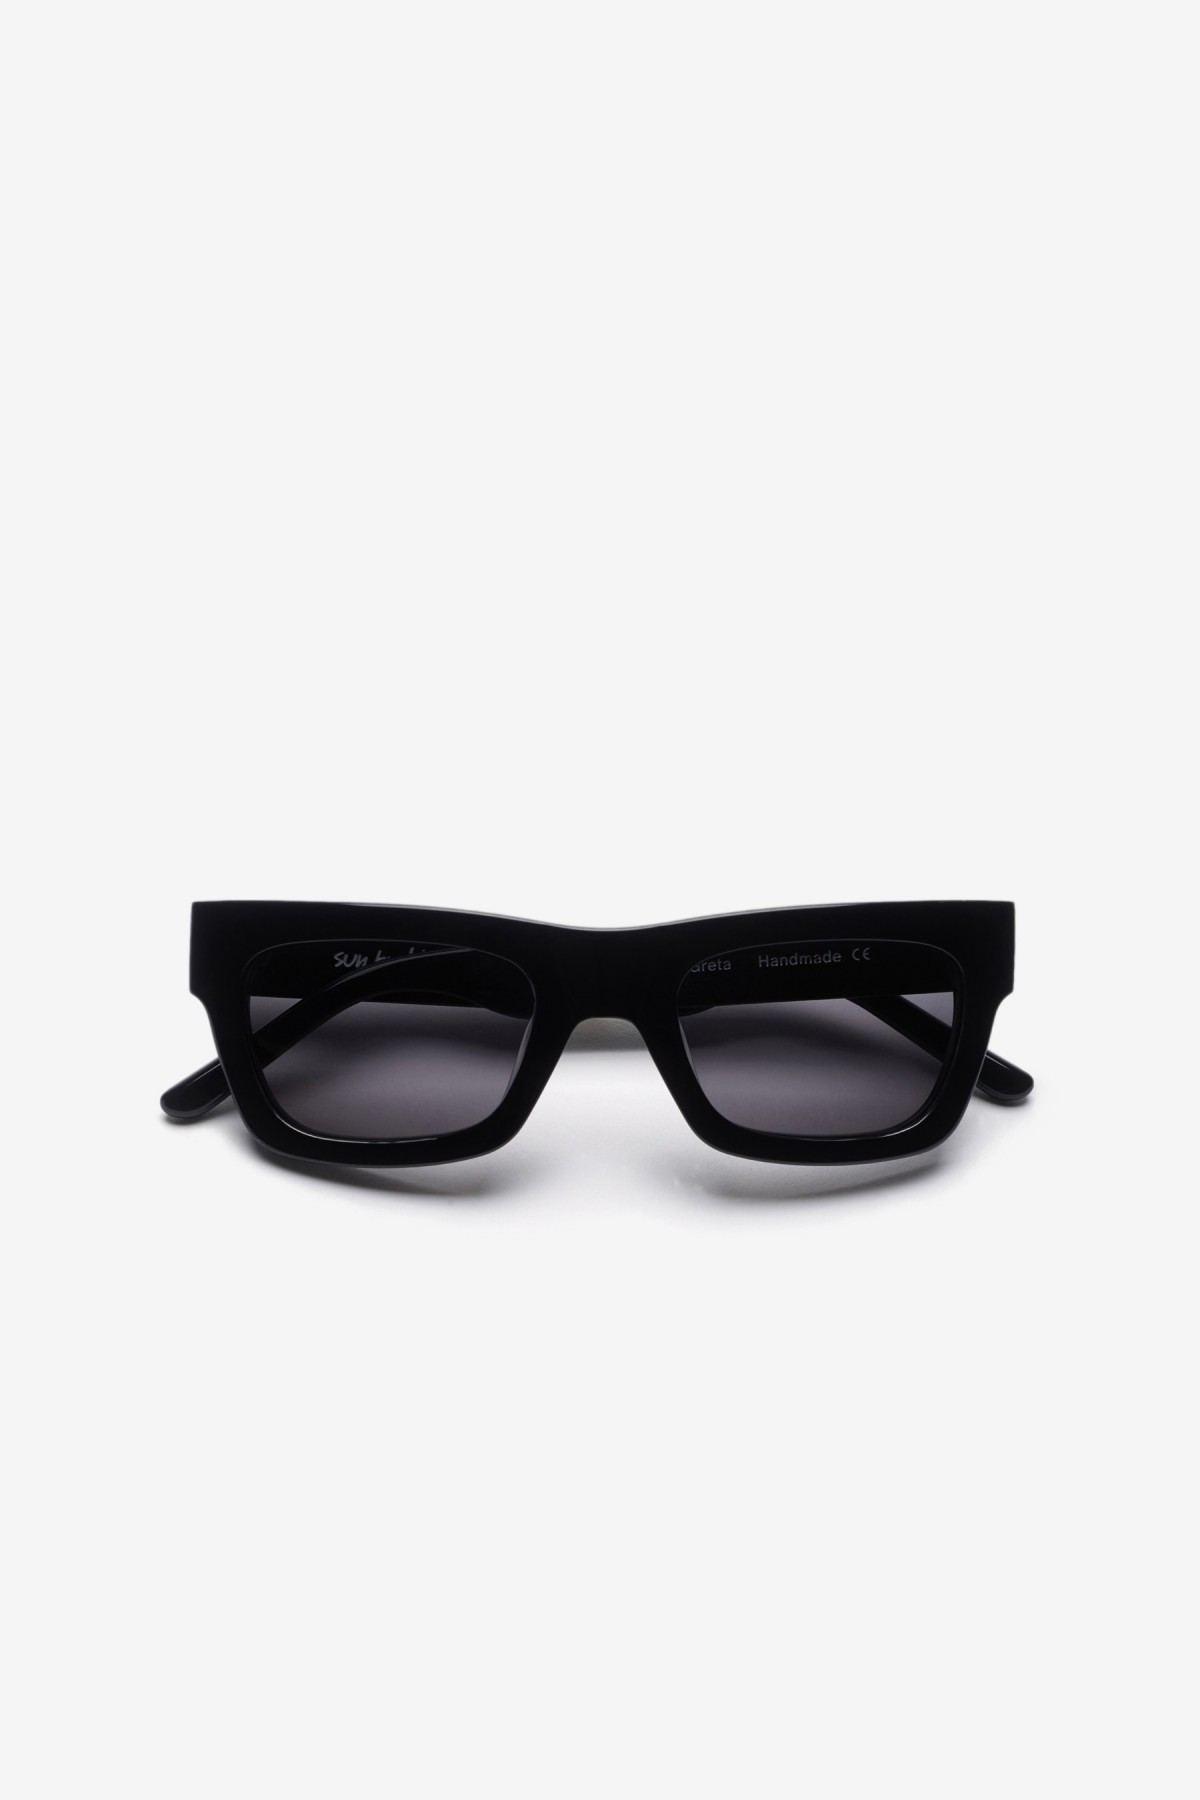 Sun Buddies Greta Sunglasses in Black 